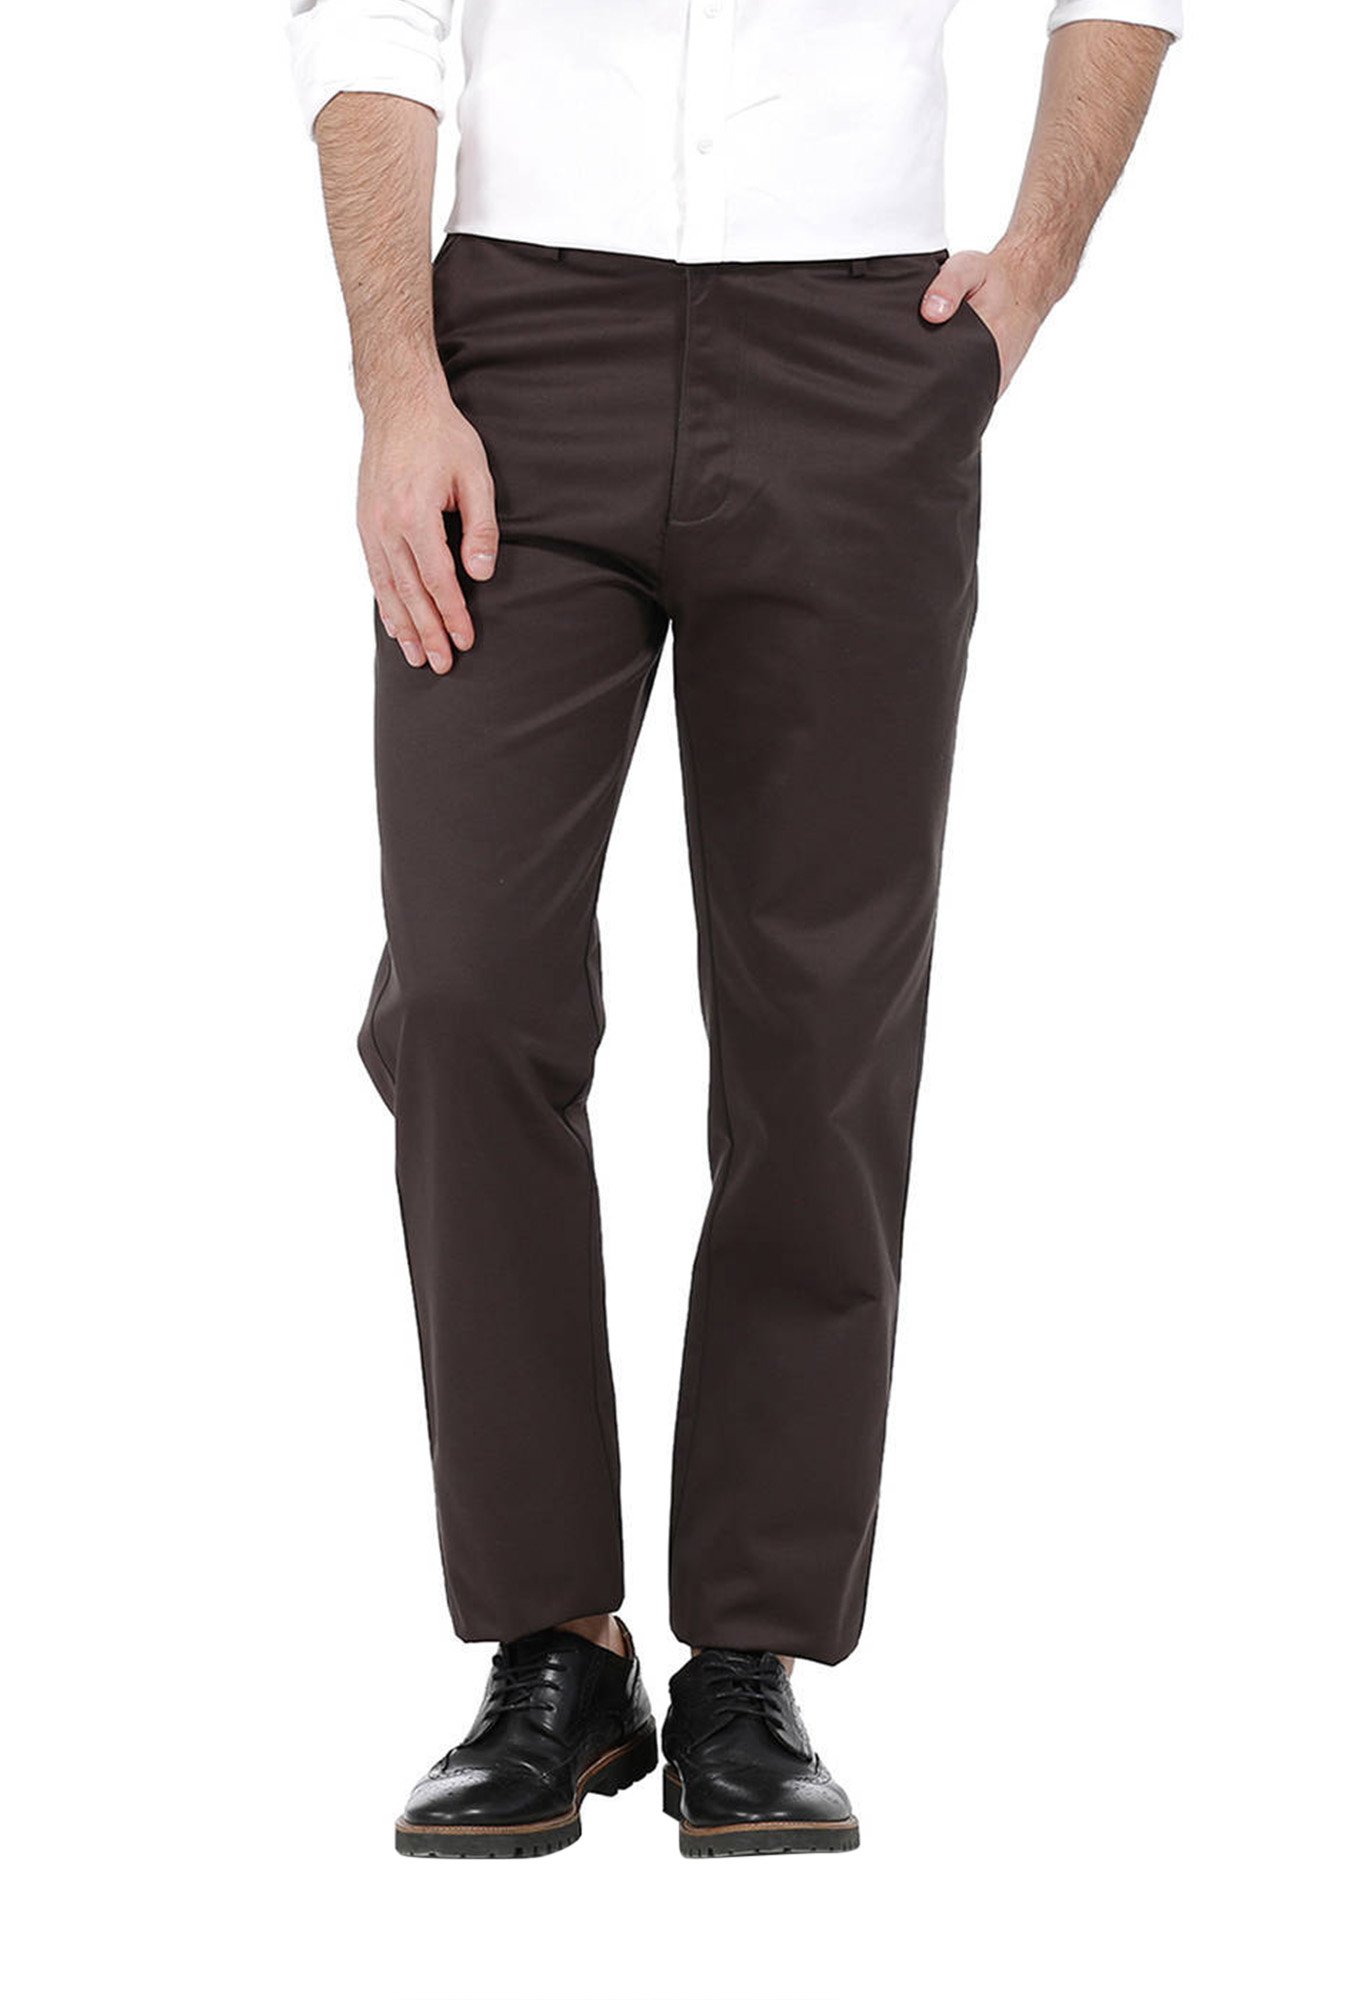 Chocolate Brown Cotton Dress Pants - Acustom Apparel